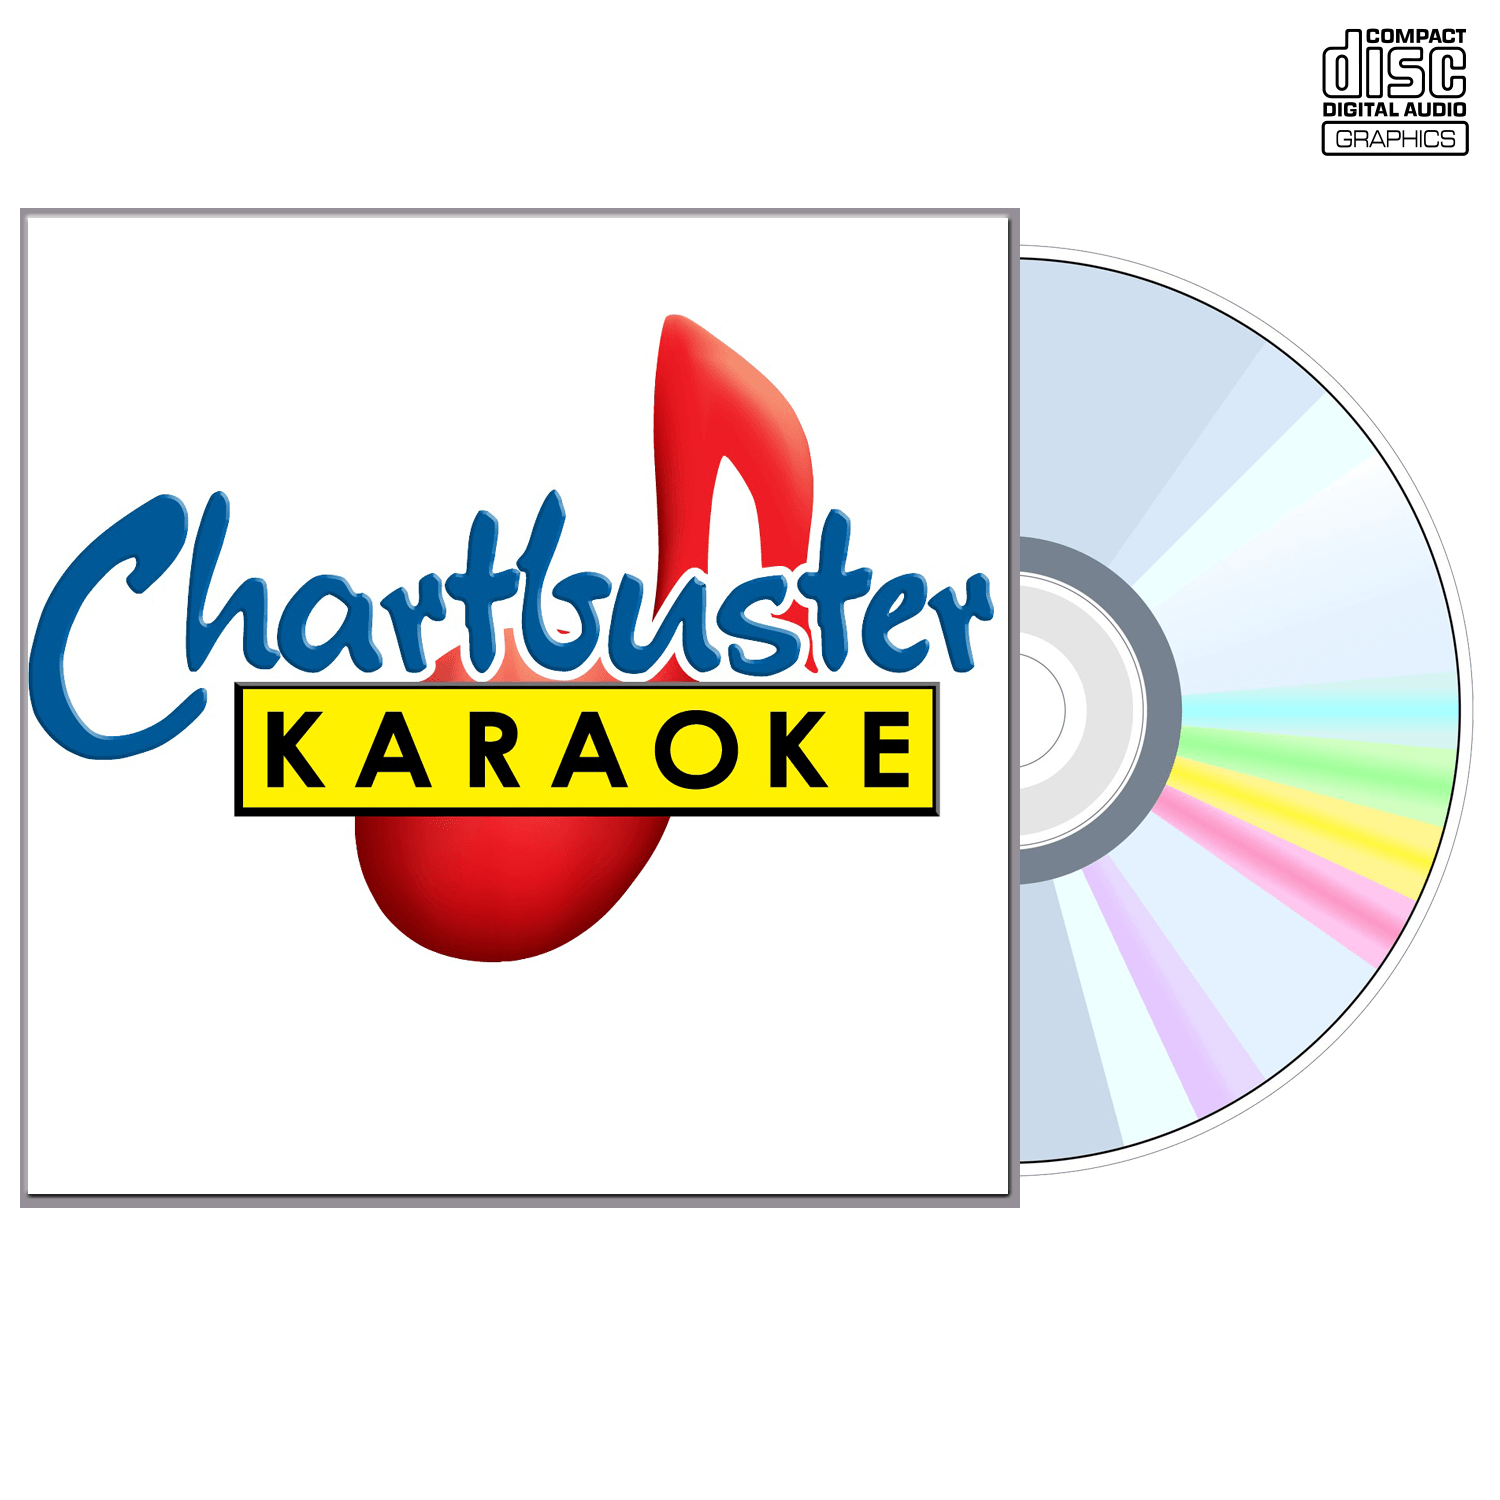 Eric Heatherly - CD+G - Chartbuster Karaoke - Karaoke Home Entertainment